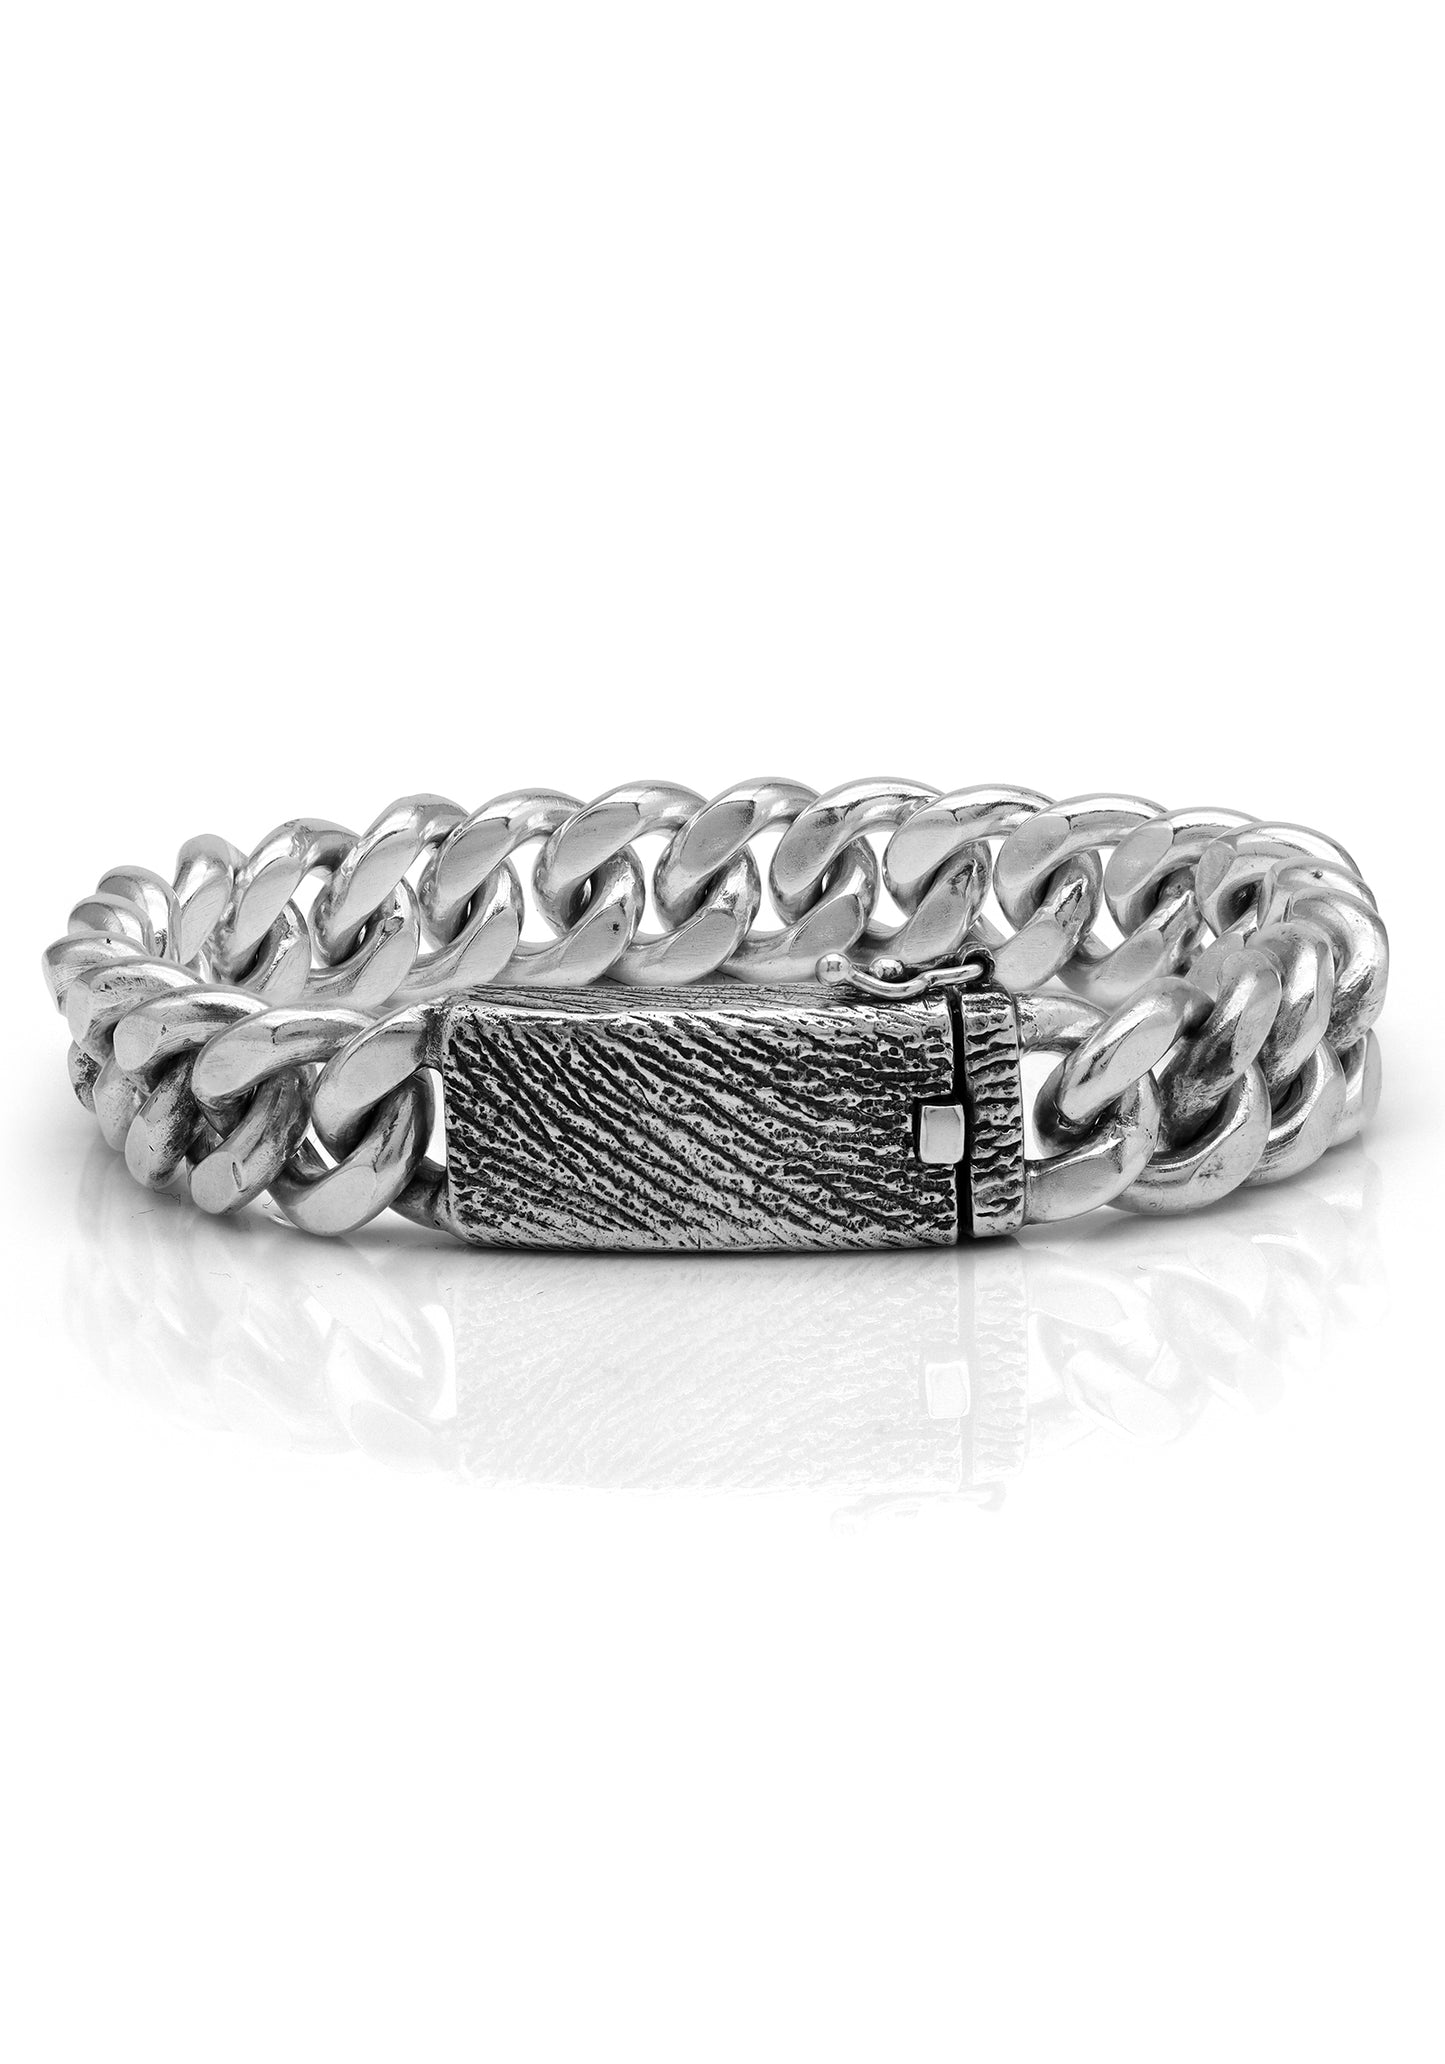 Elephant Curb Chain Bracelet - Sterling Silver